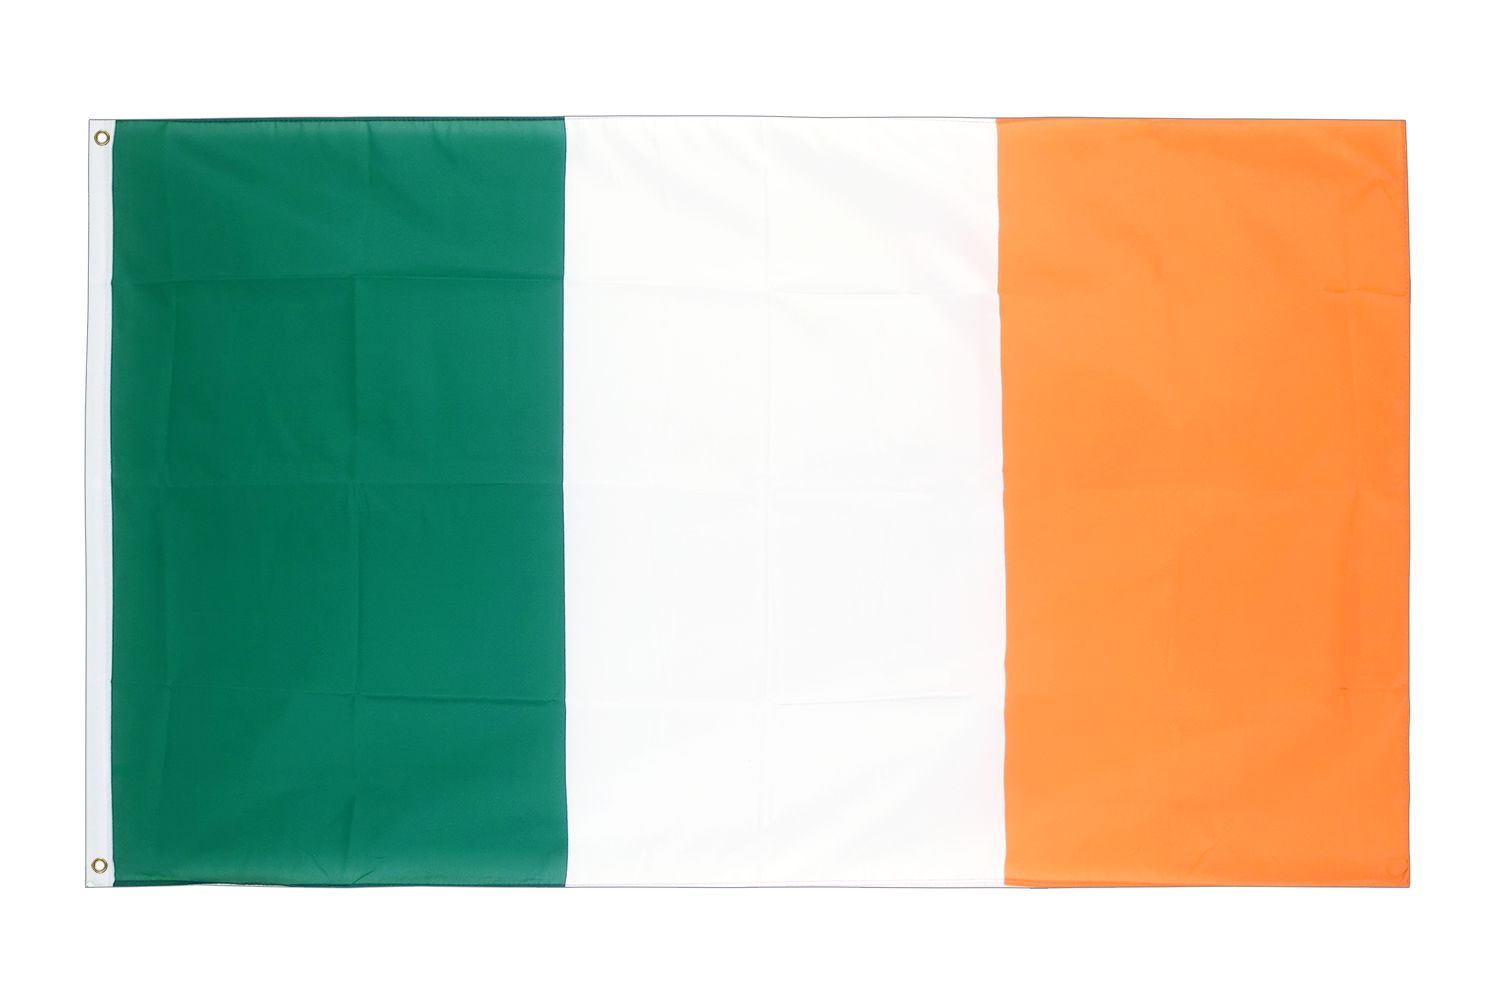 Ireland Flag ناقل PNG صورة